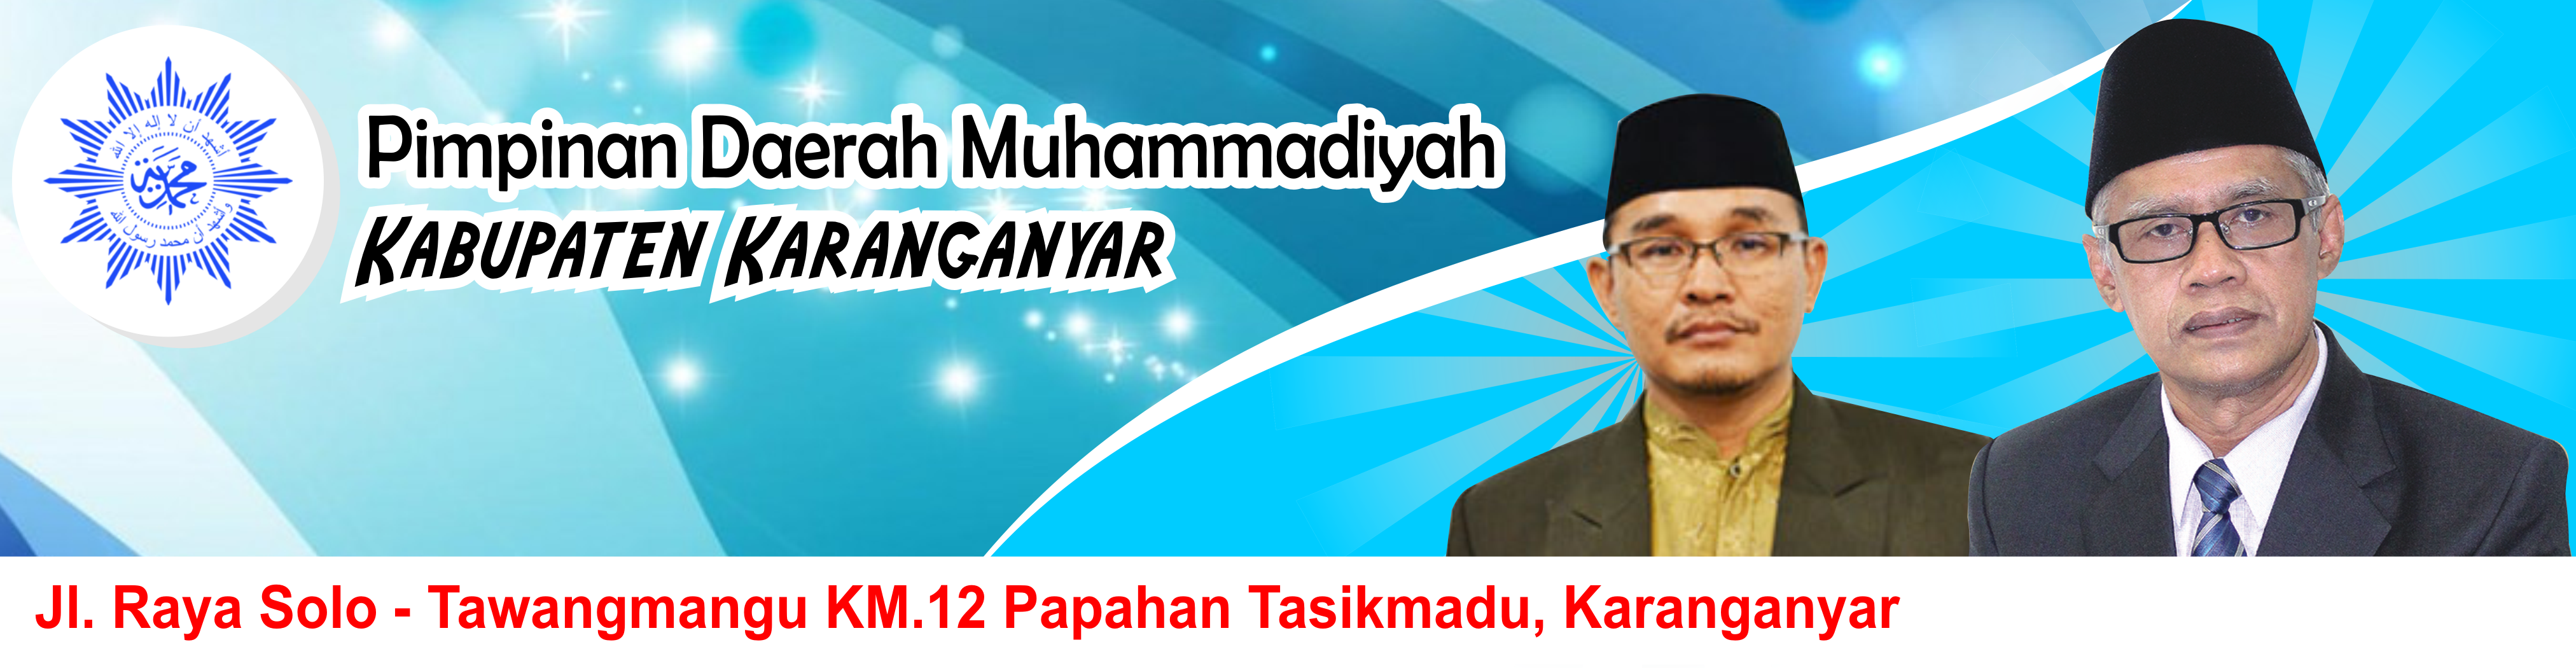 Lembaga Hikmah dan Kebijakan Publik Pimpinan Daerah Muhammadiyah Kabupaten Karanganyar